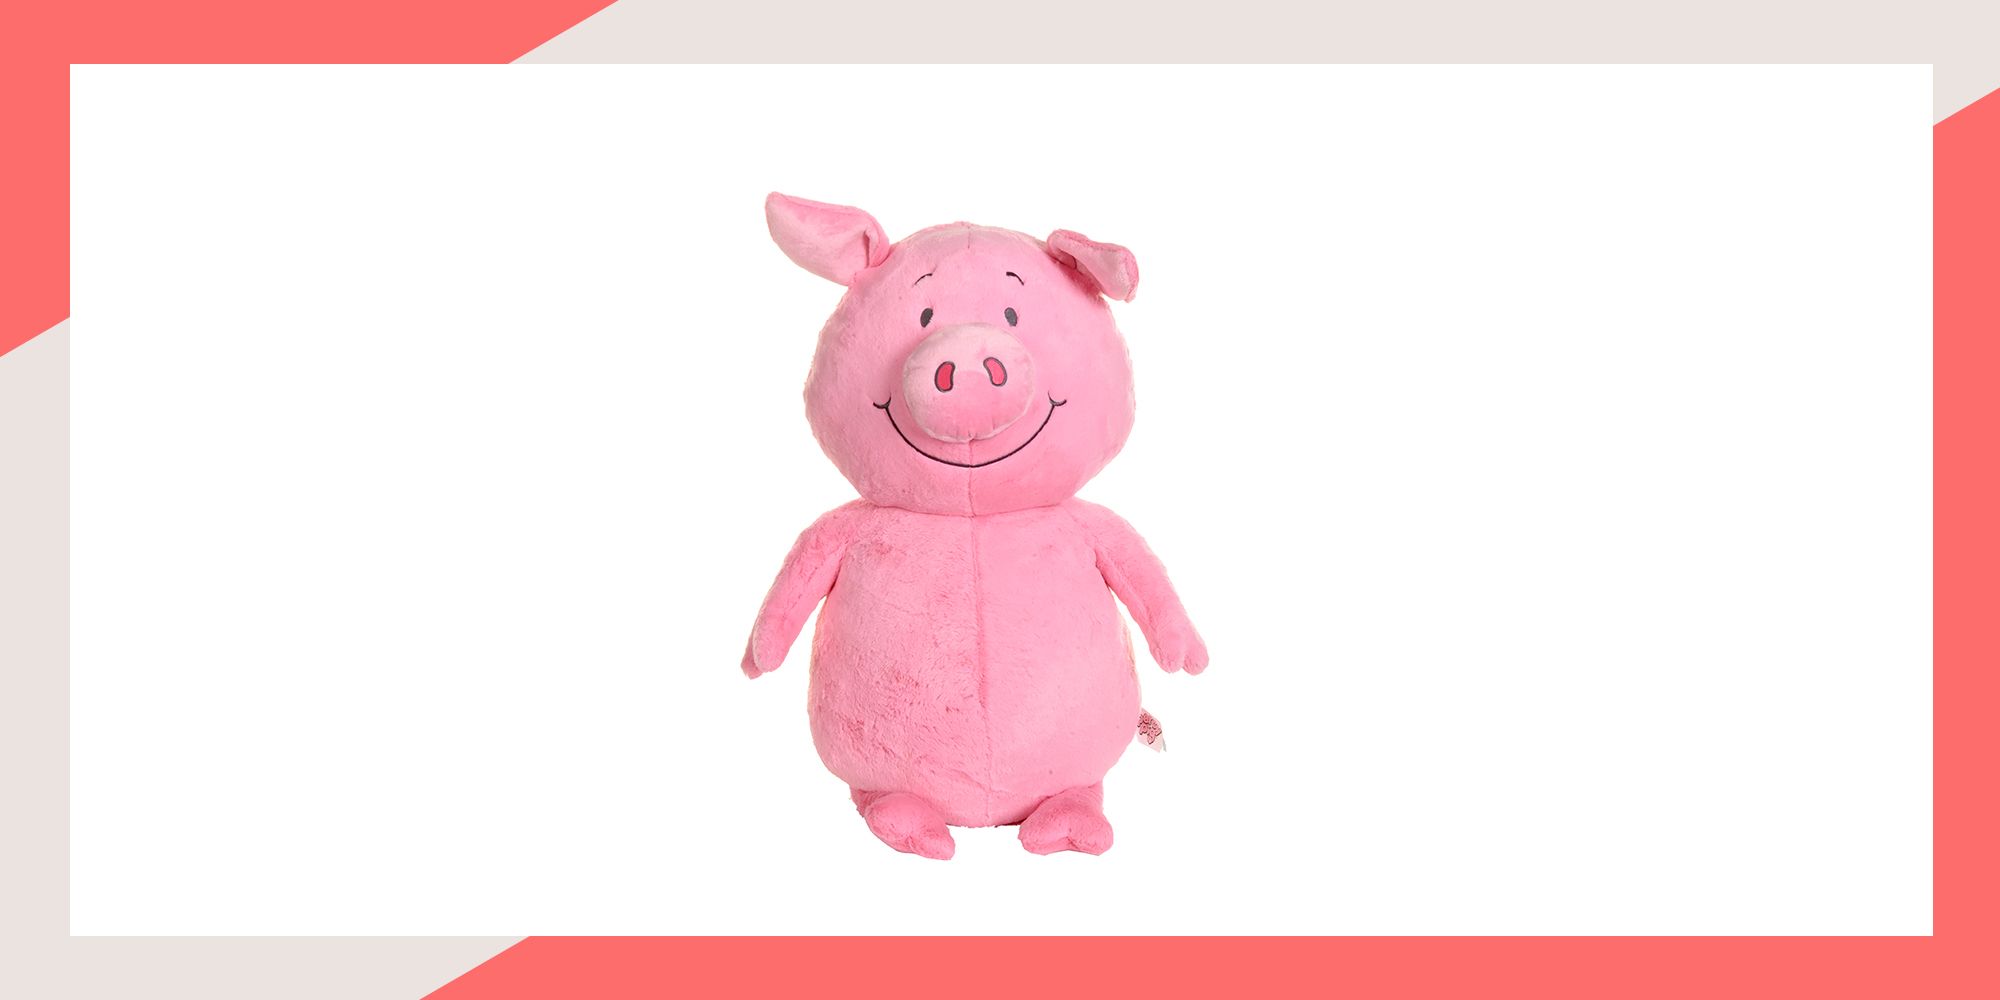 human size pig stuffed toy